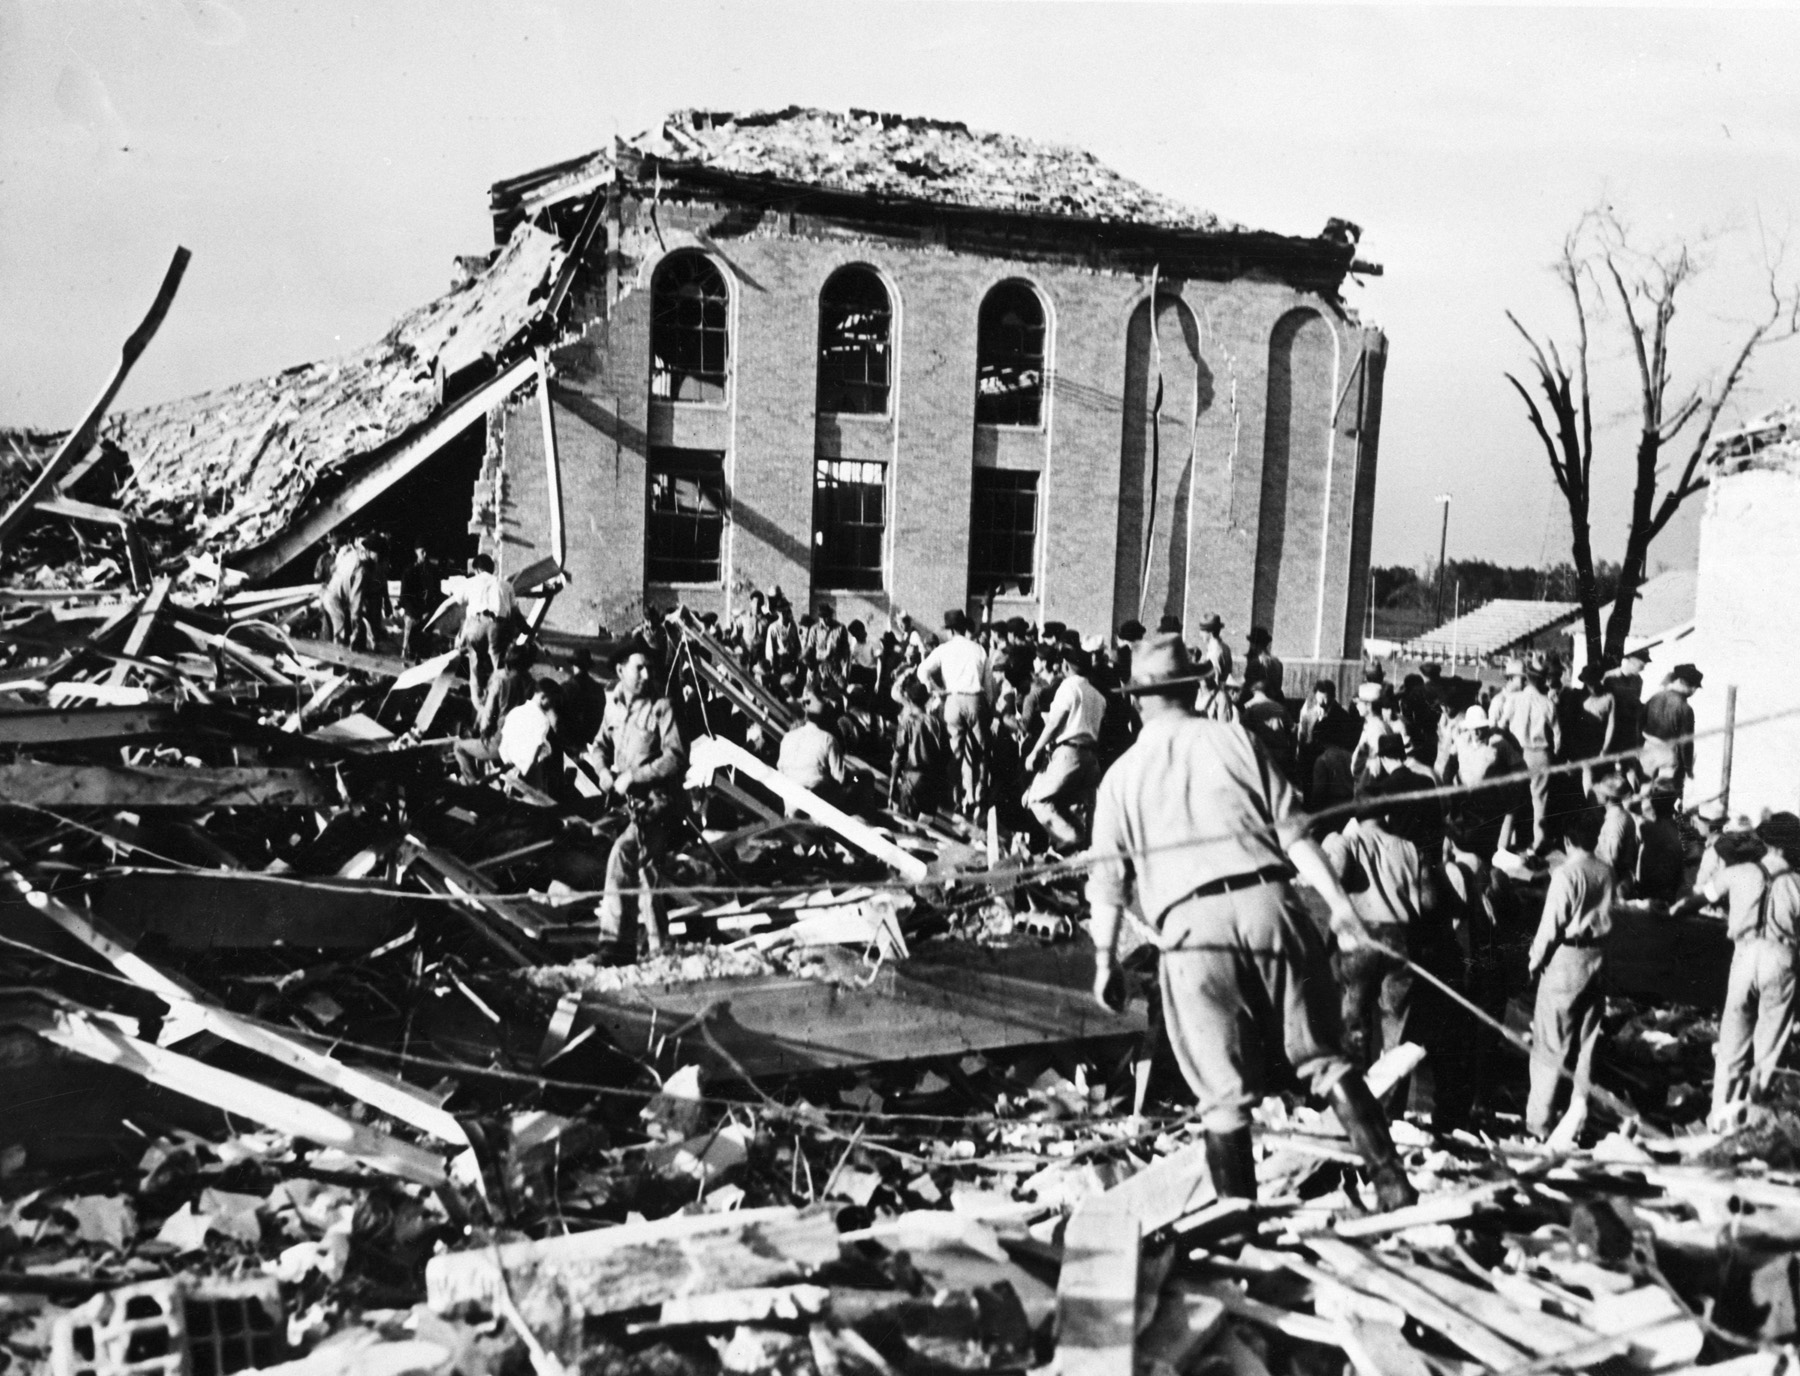 294 killed in New London, Texas school explosion, 80 years ago - Houston Chronicle1800 x 1376